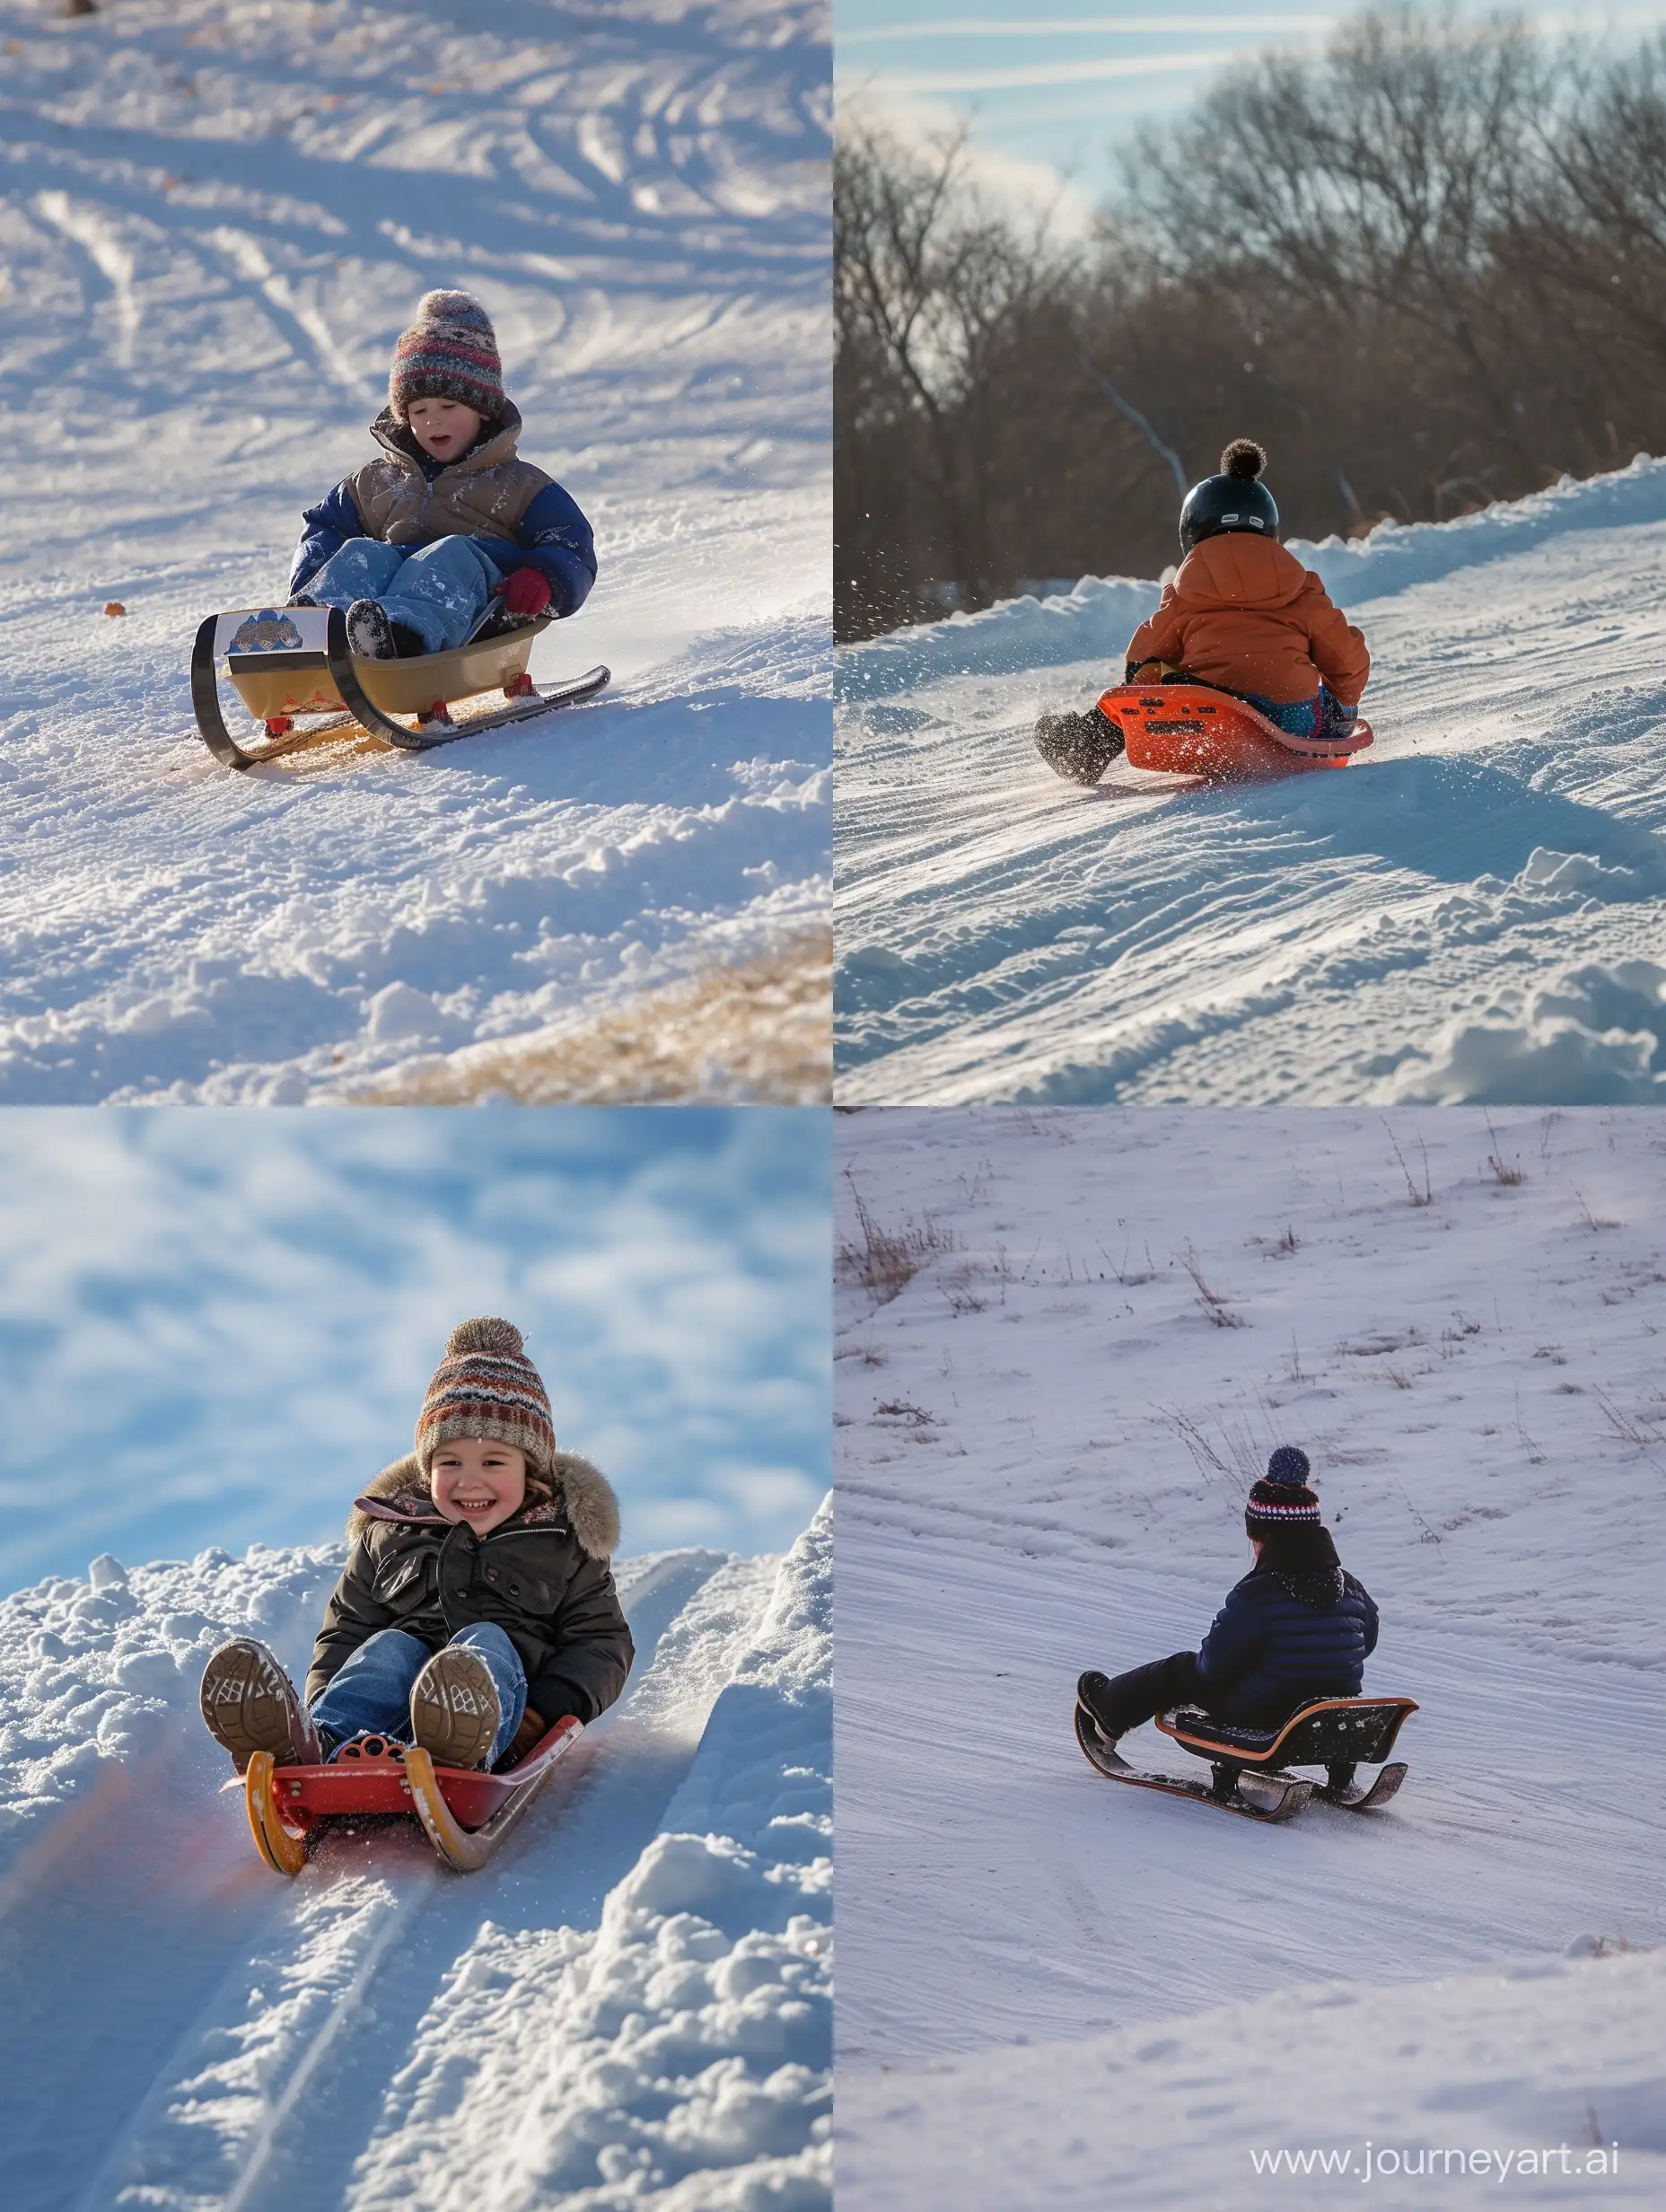 Joyful-Child-Sled-Riding-Adventure-on-Winter-Hill